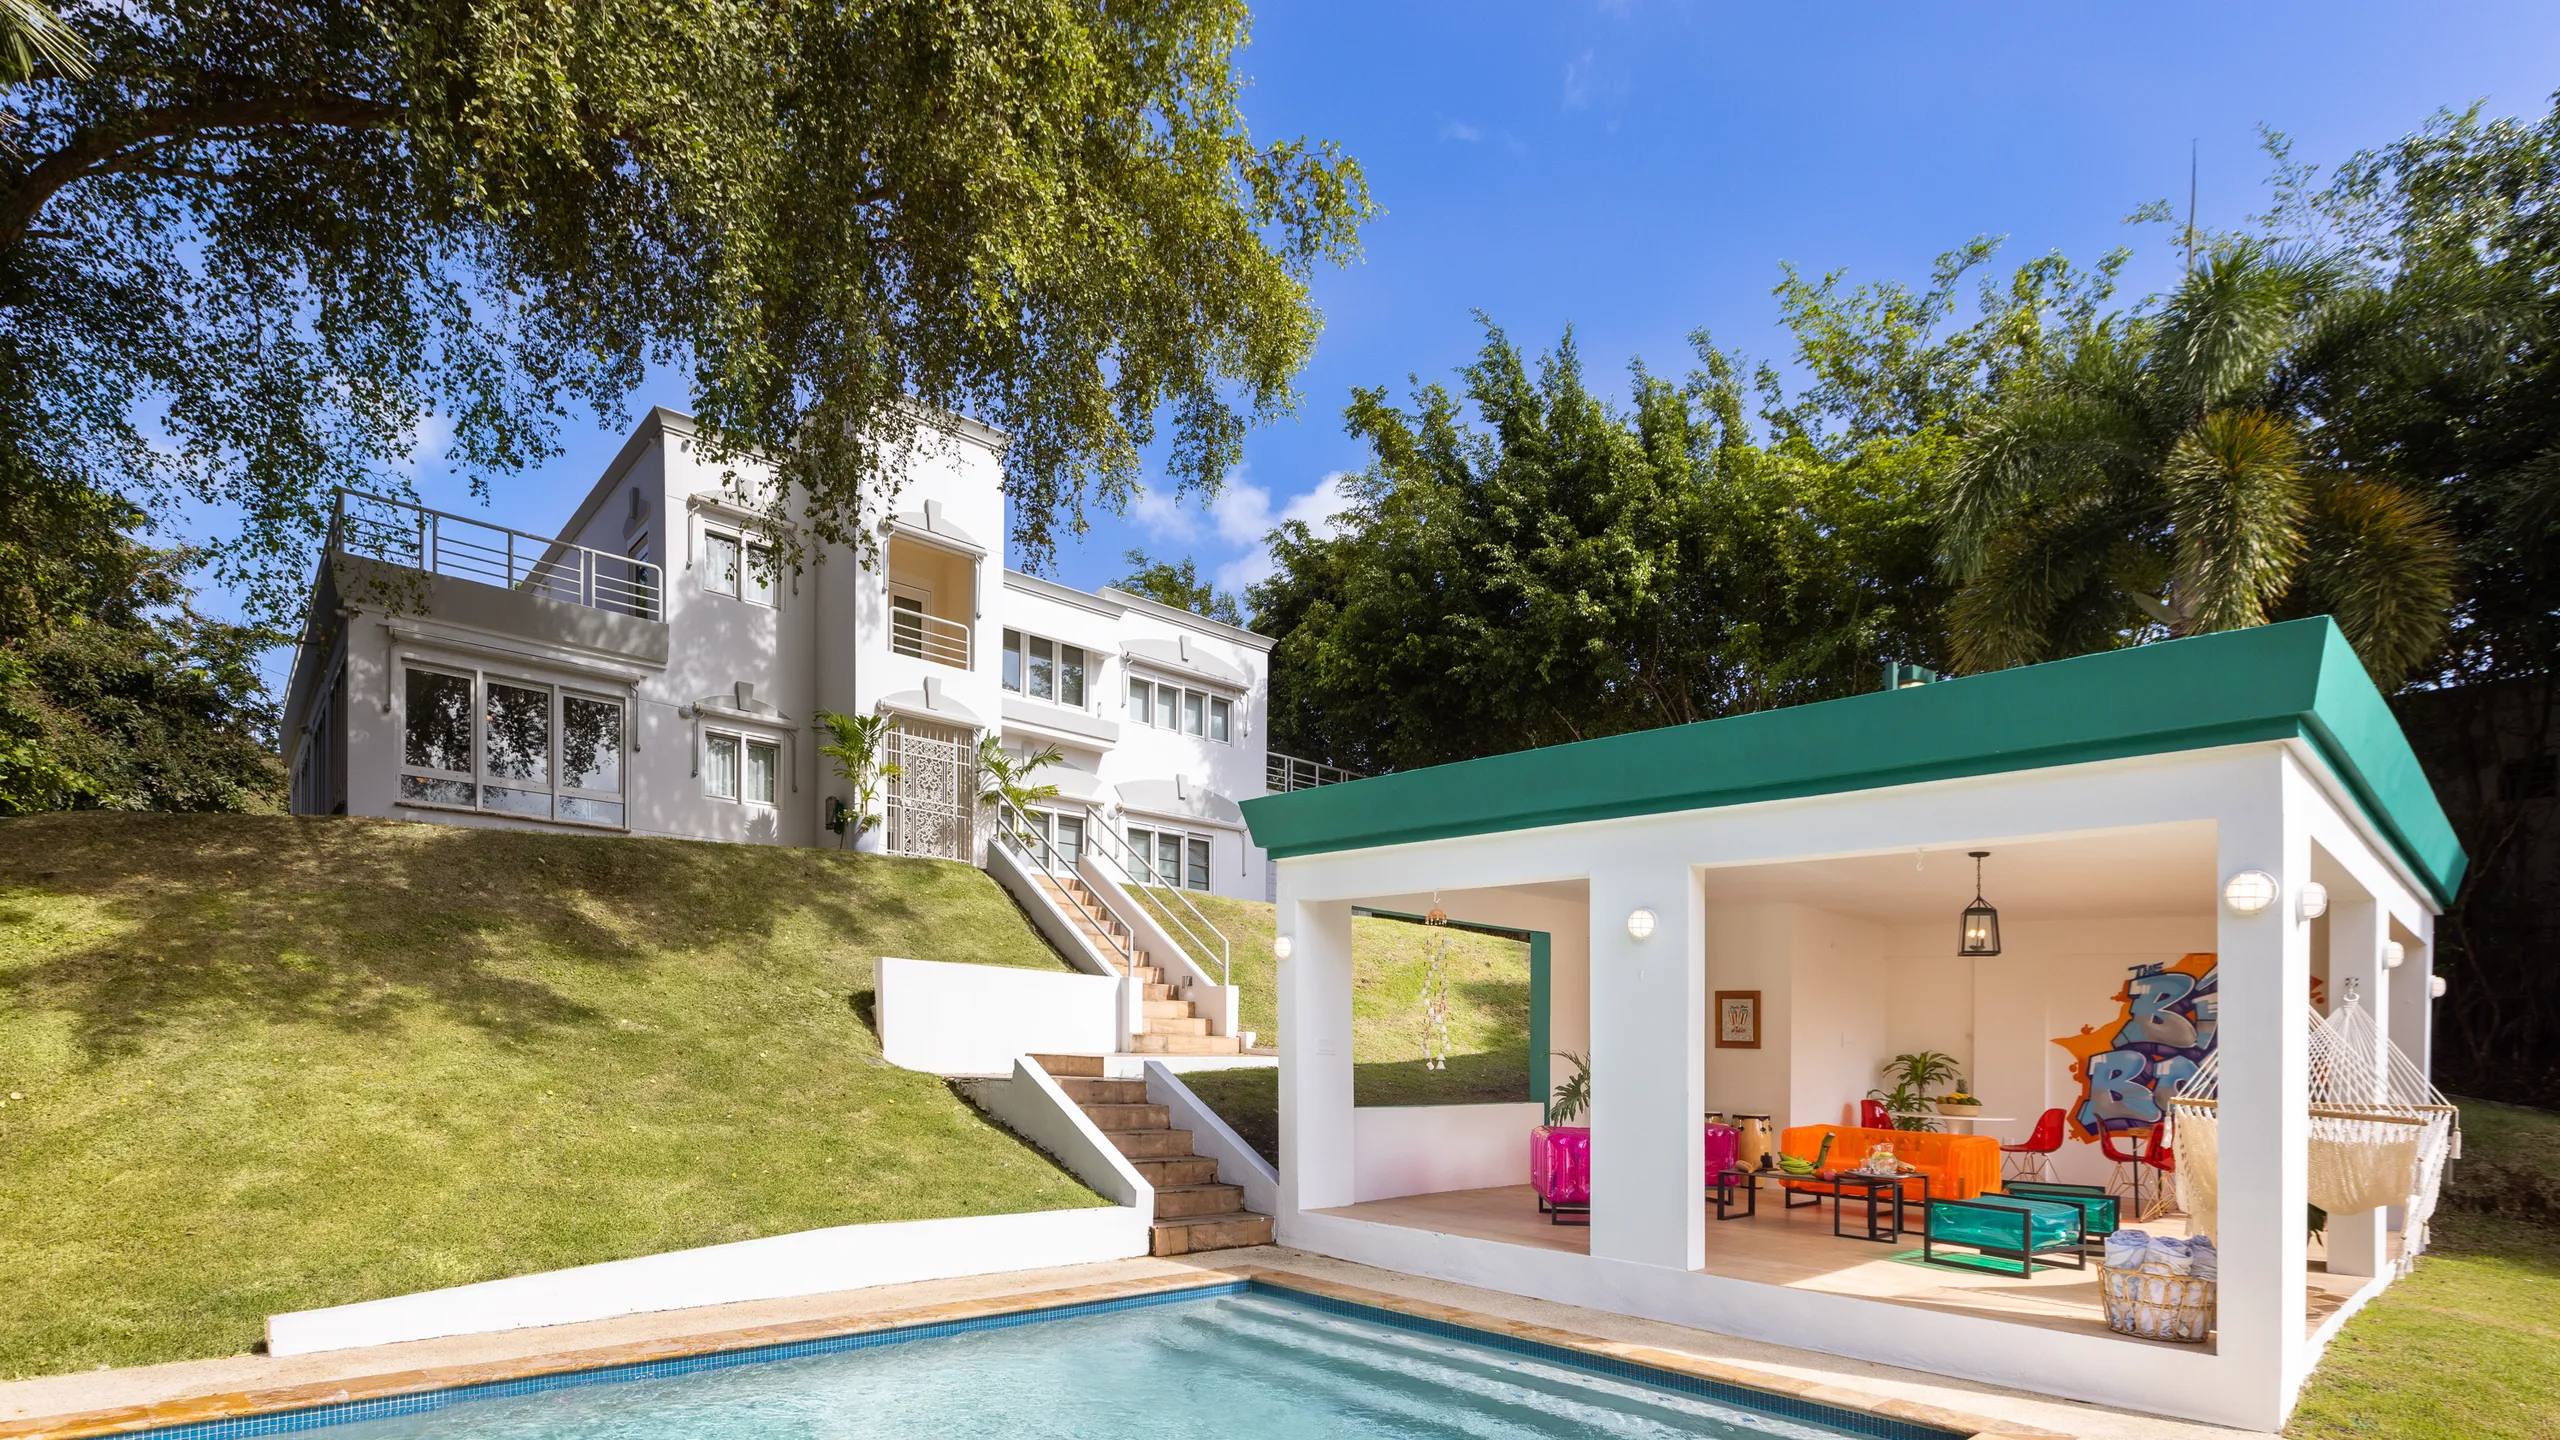 The Hidden Luxuries of Bad Bunny’s House in Puerto Rico